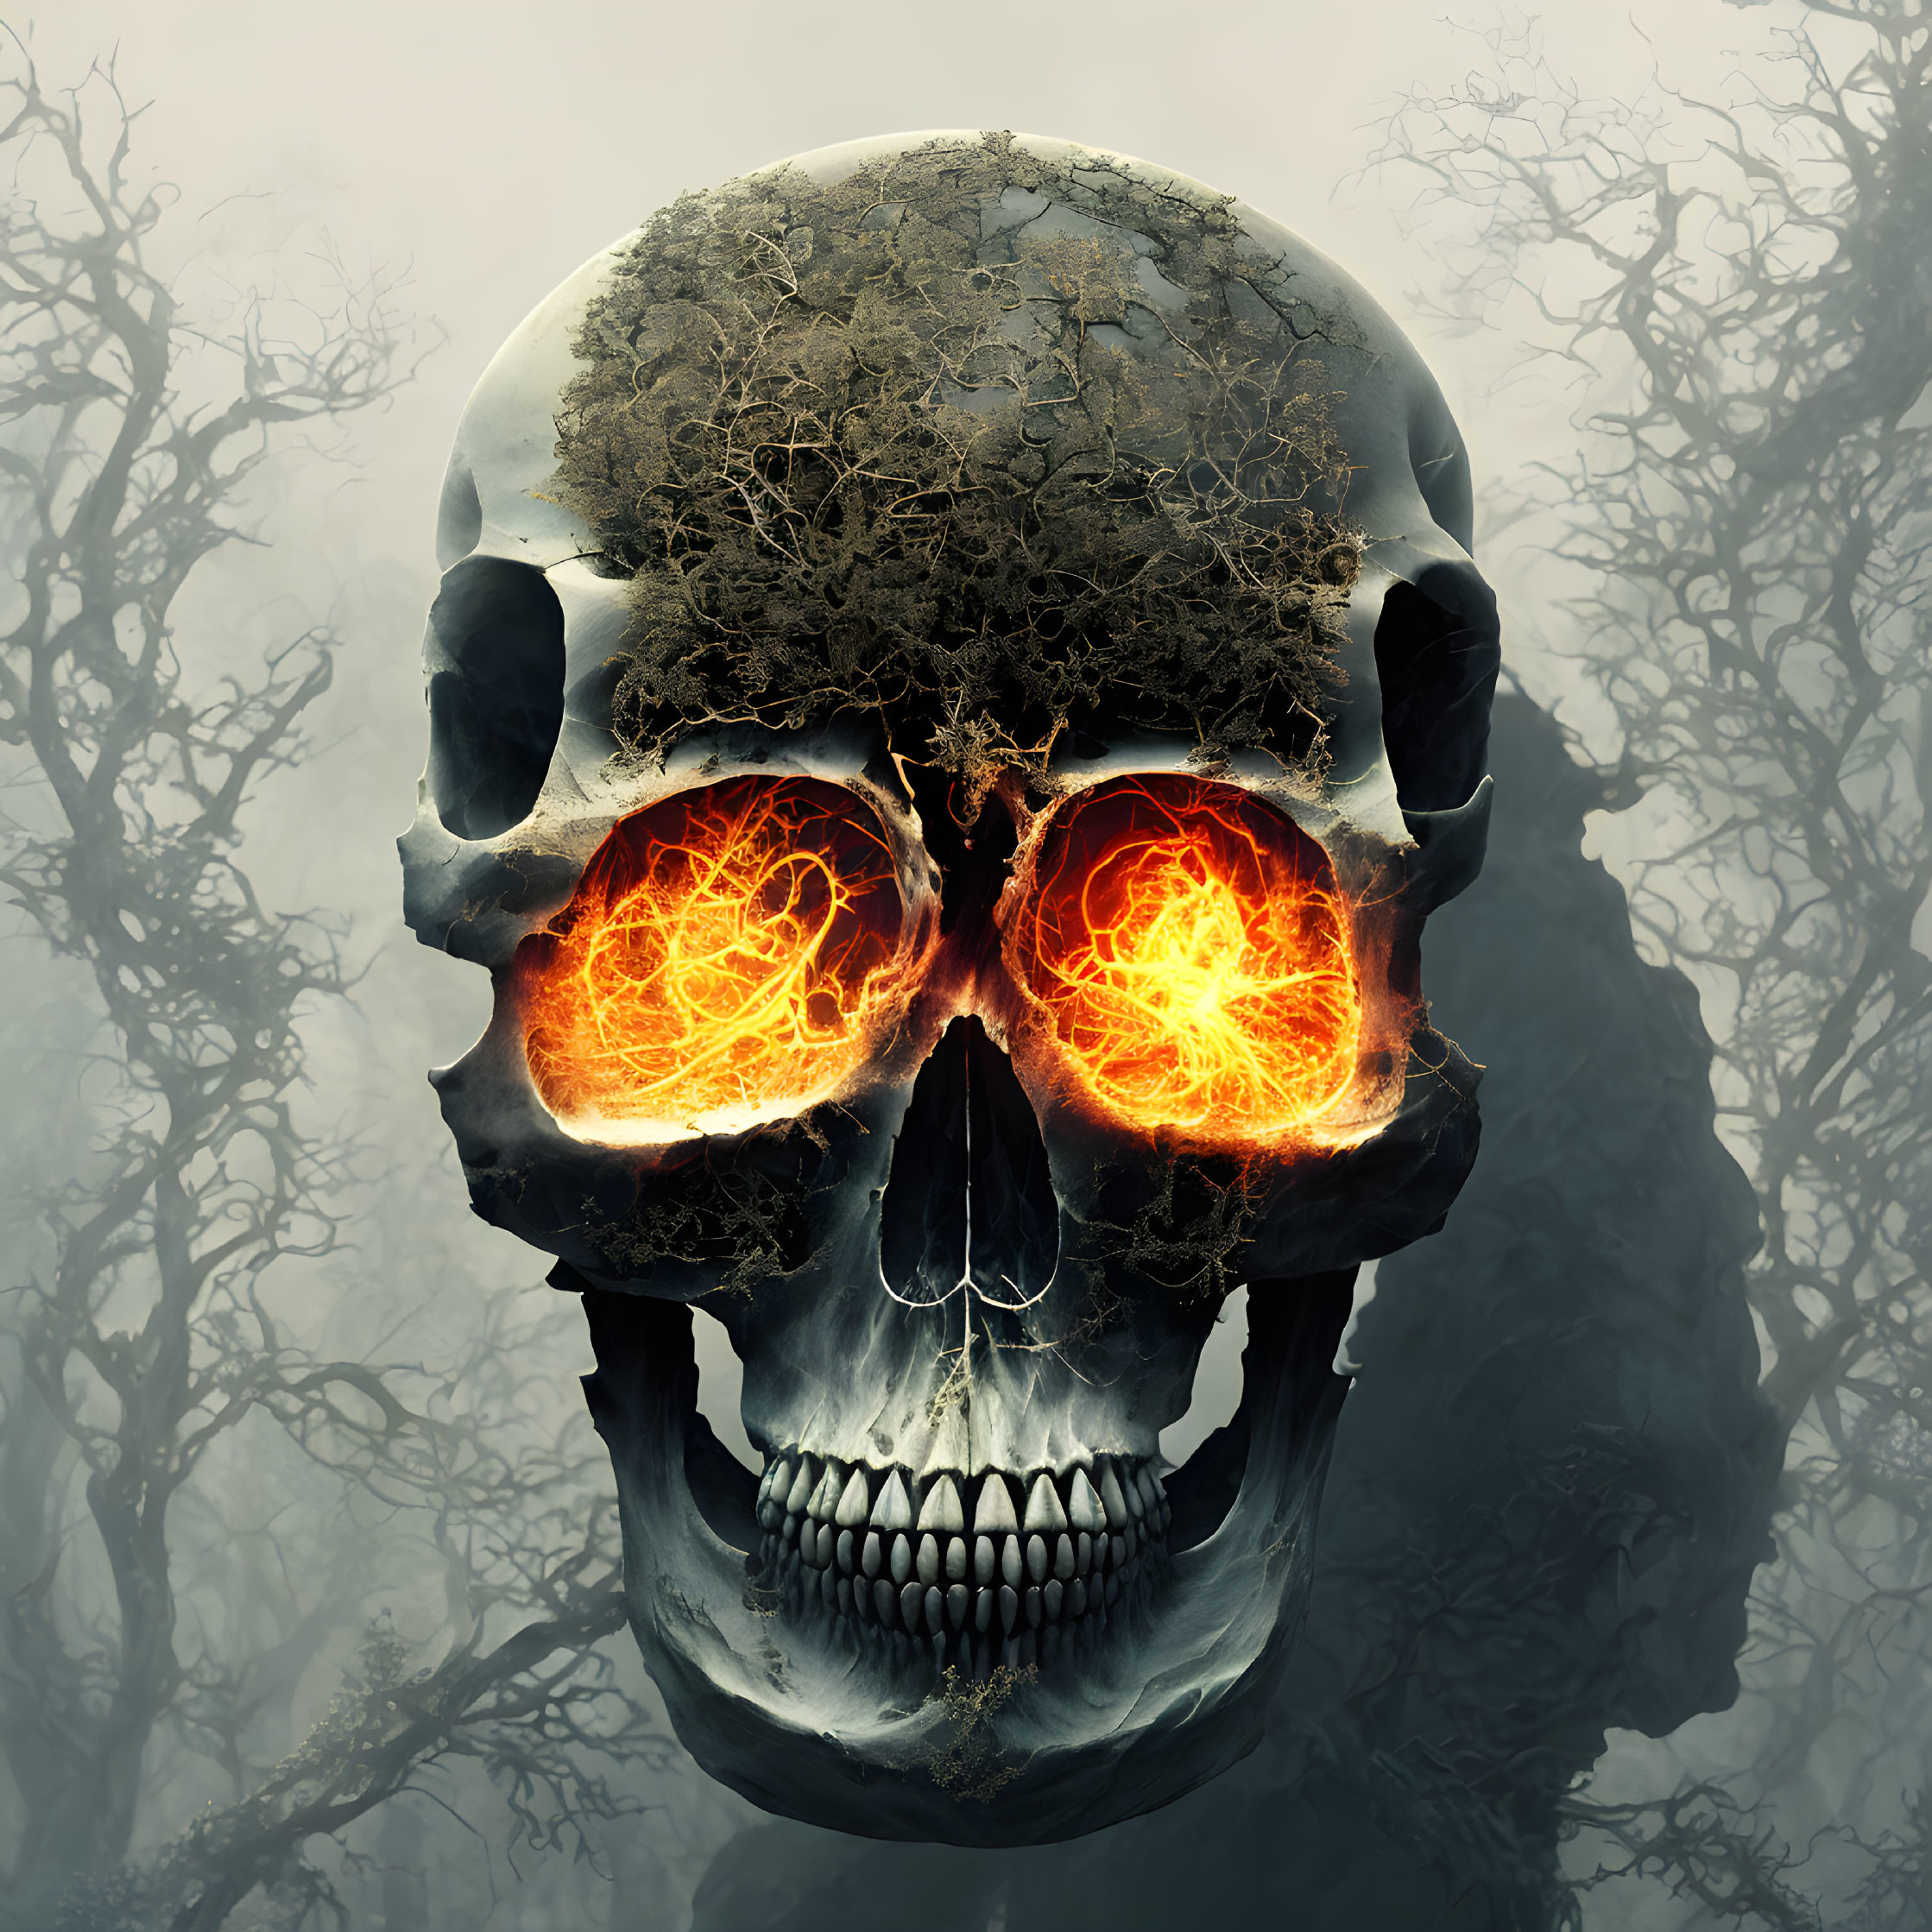 Skull with Moss, Fiery Eyes, Misty Trees Background